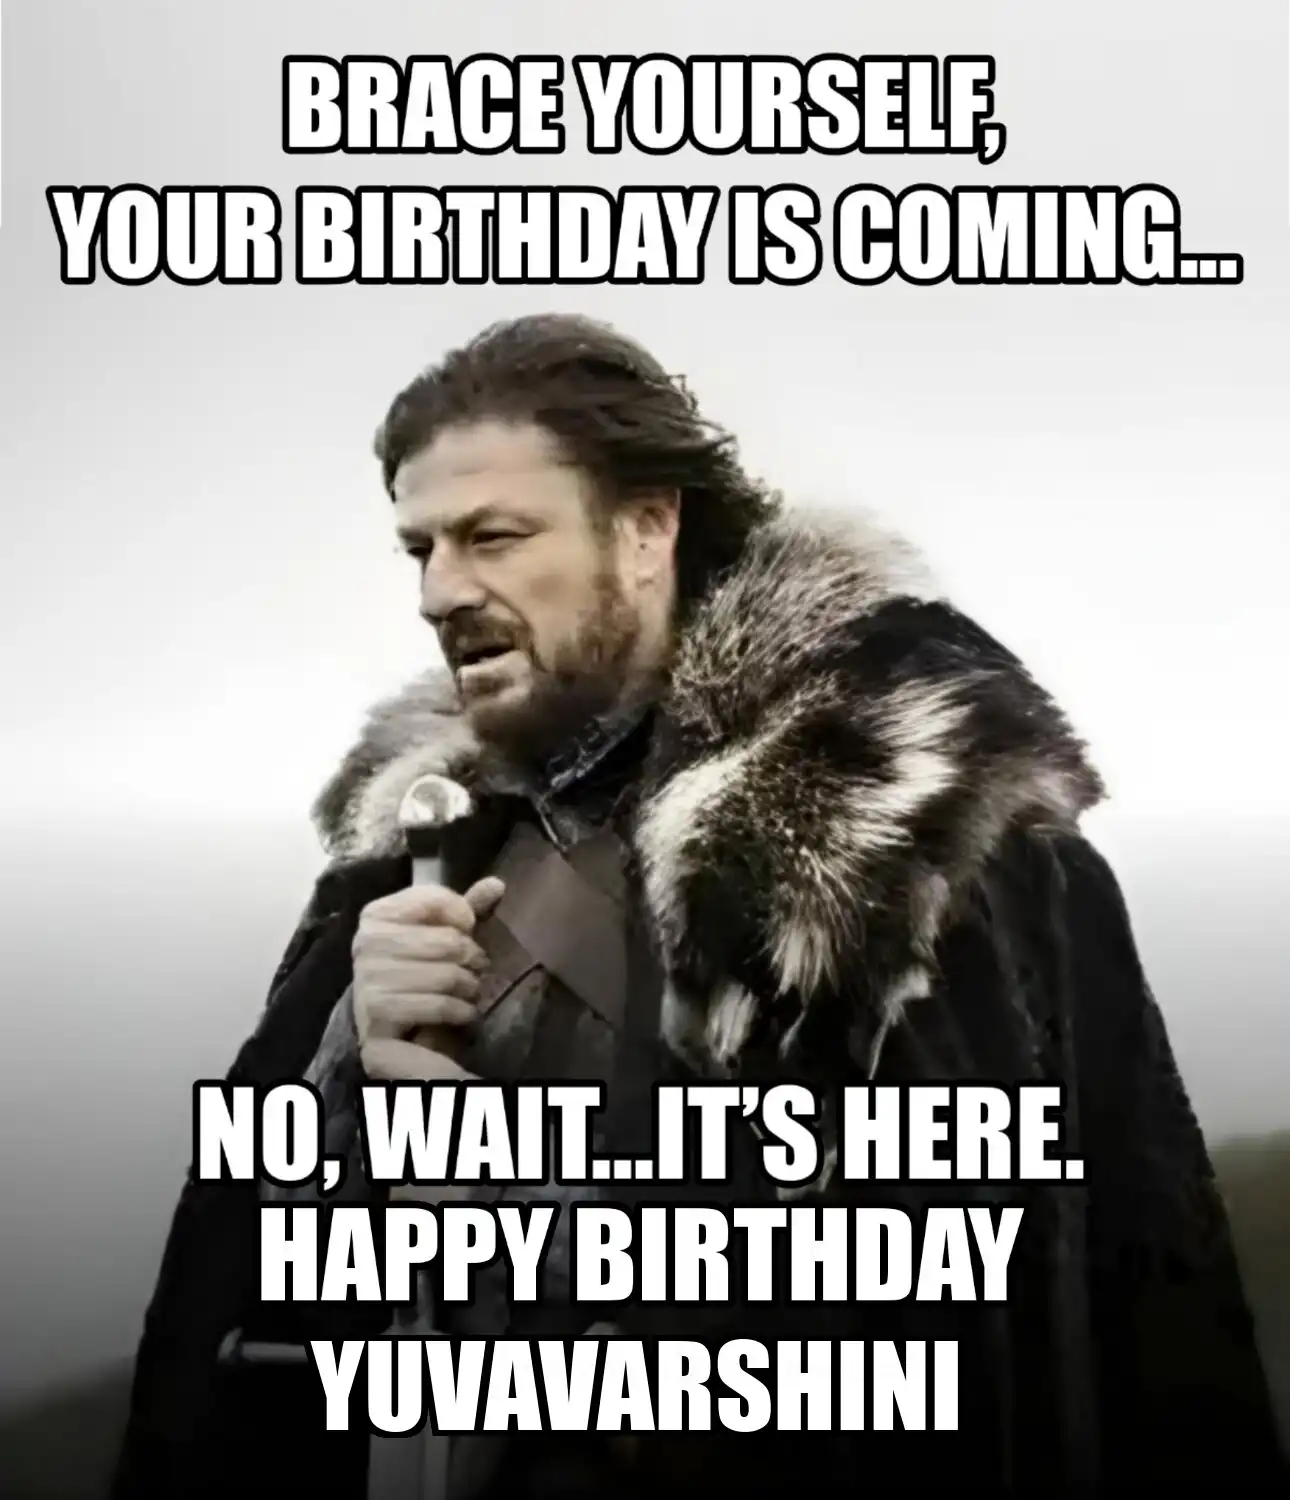 Happy Birthday Yuvavarshini Brace Yourself Your Birthday Is Coming Meme